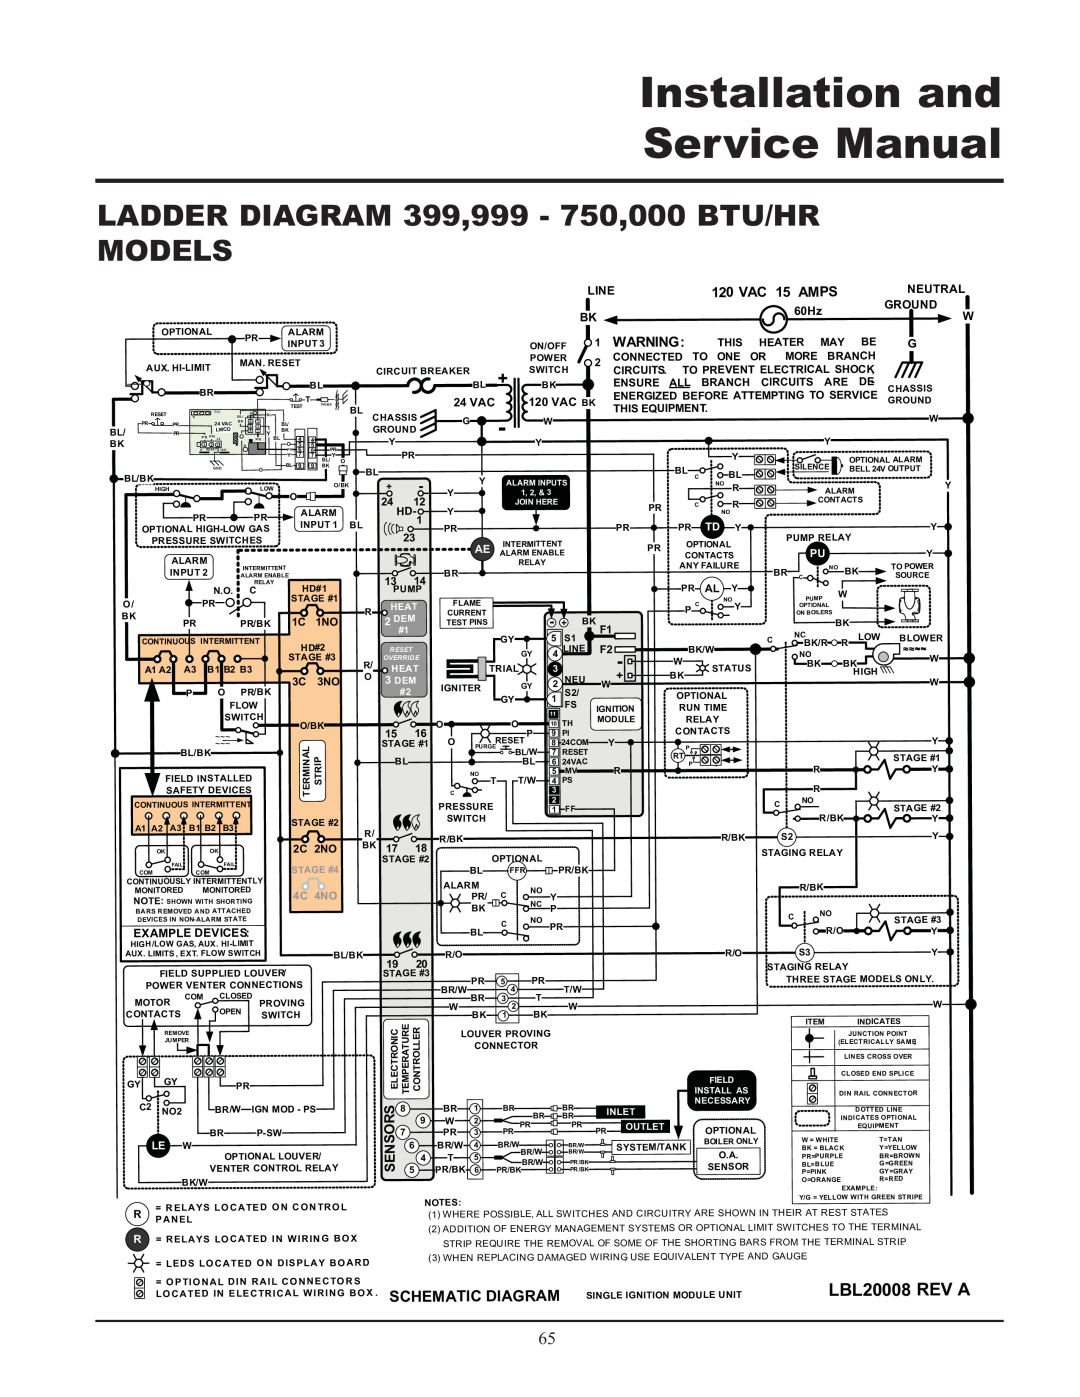 Lochinvar LADDER DIAGRAM 399,999 - 750,000 BTU/HR MODELS, LBL20008 REV A, Installation and Service Manual, VAC 15 AMPS 